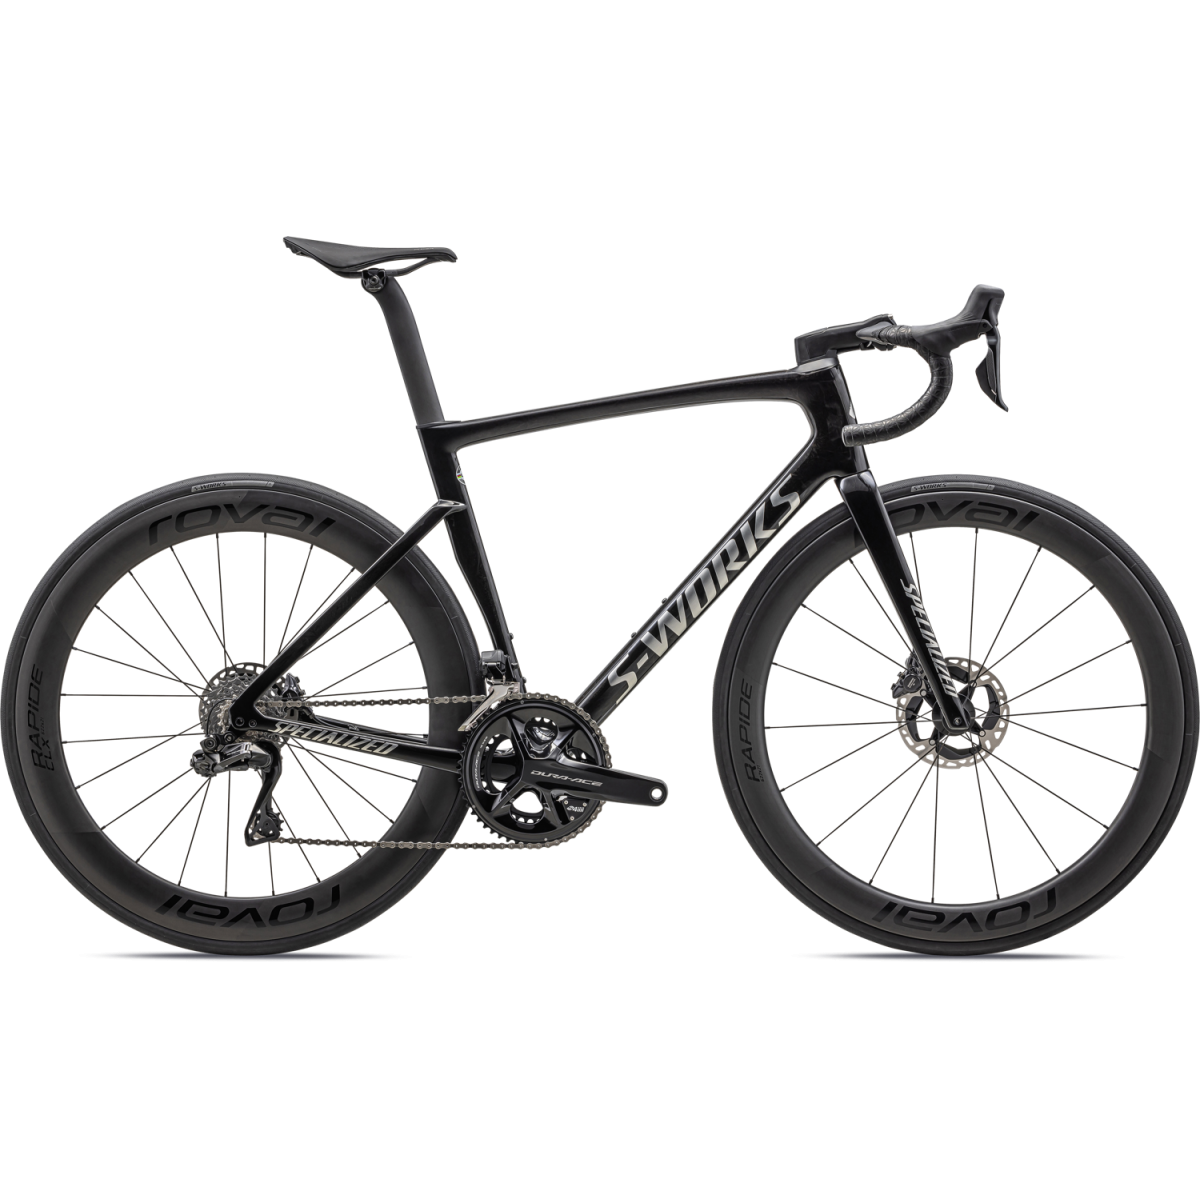 S-Works Tarmac SL7 - Shimano Dura-Ace DI2 plento dviratis / Gloss Black Pearl Granite Over Carbon